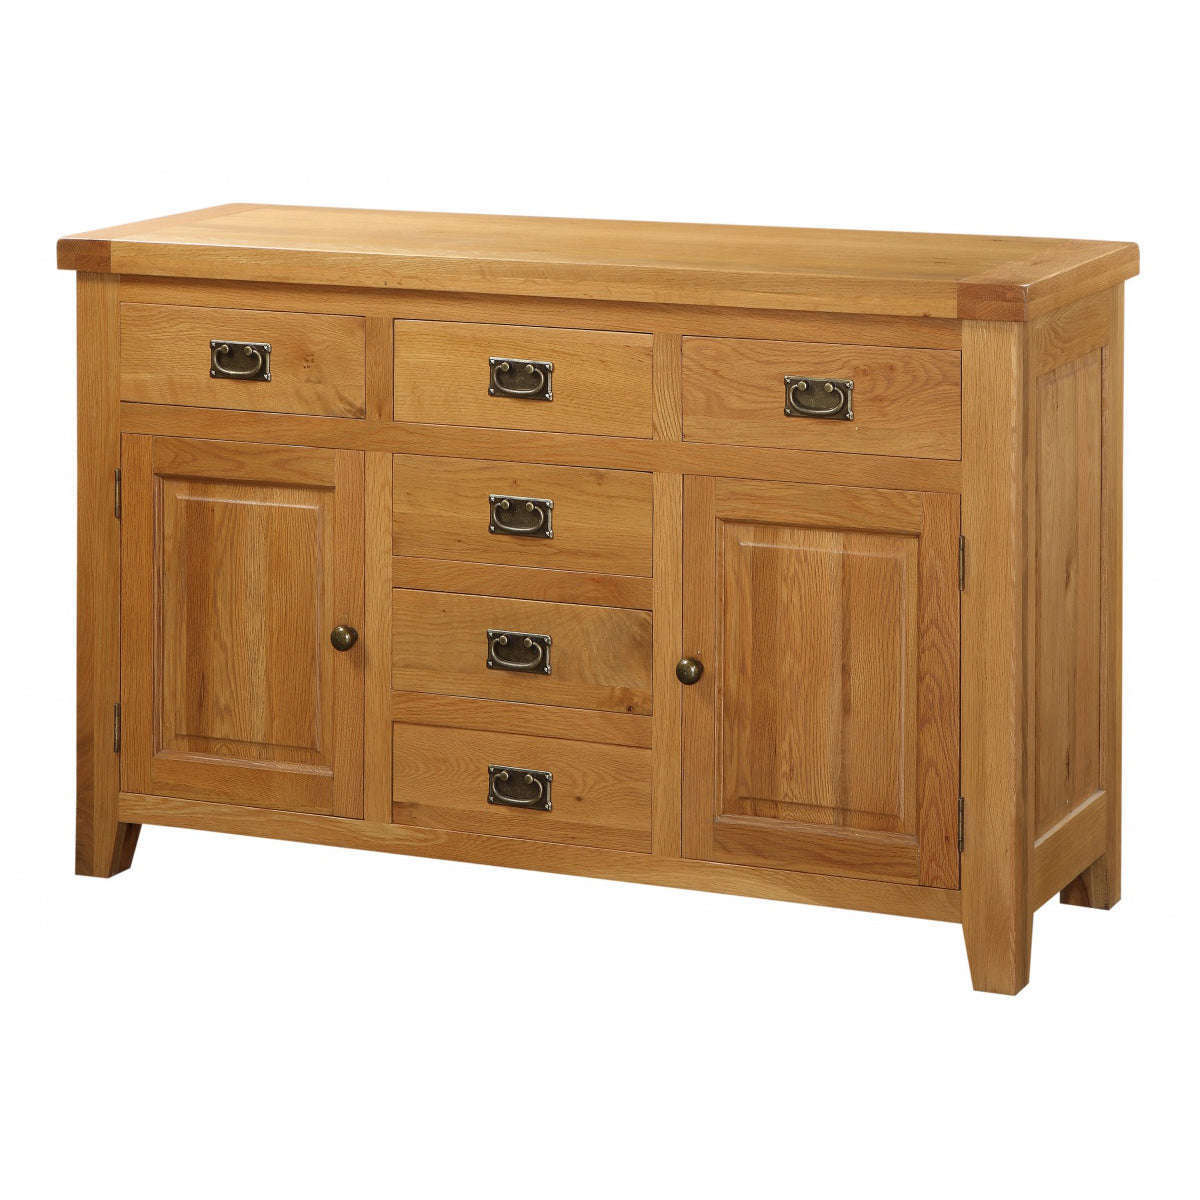 Ashpinoke:Acorn Solid Oak Sideboard Large 2 Doors & 6 Drawers,Sideboards and Displays,Heartlands Furniture